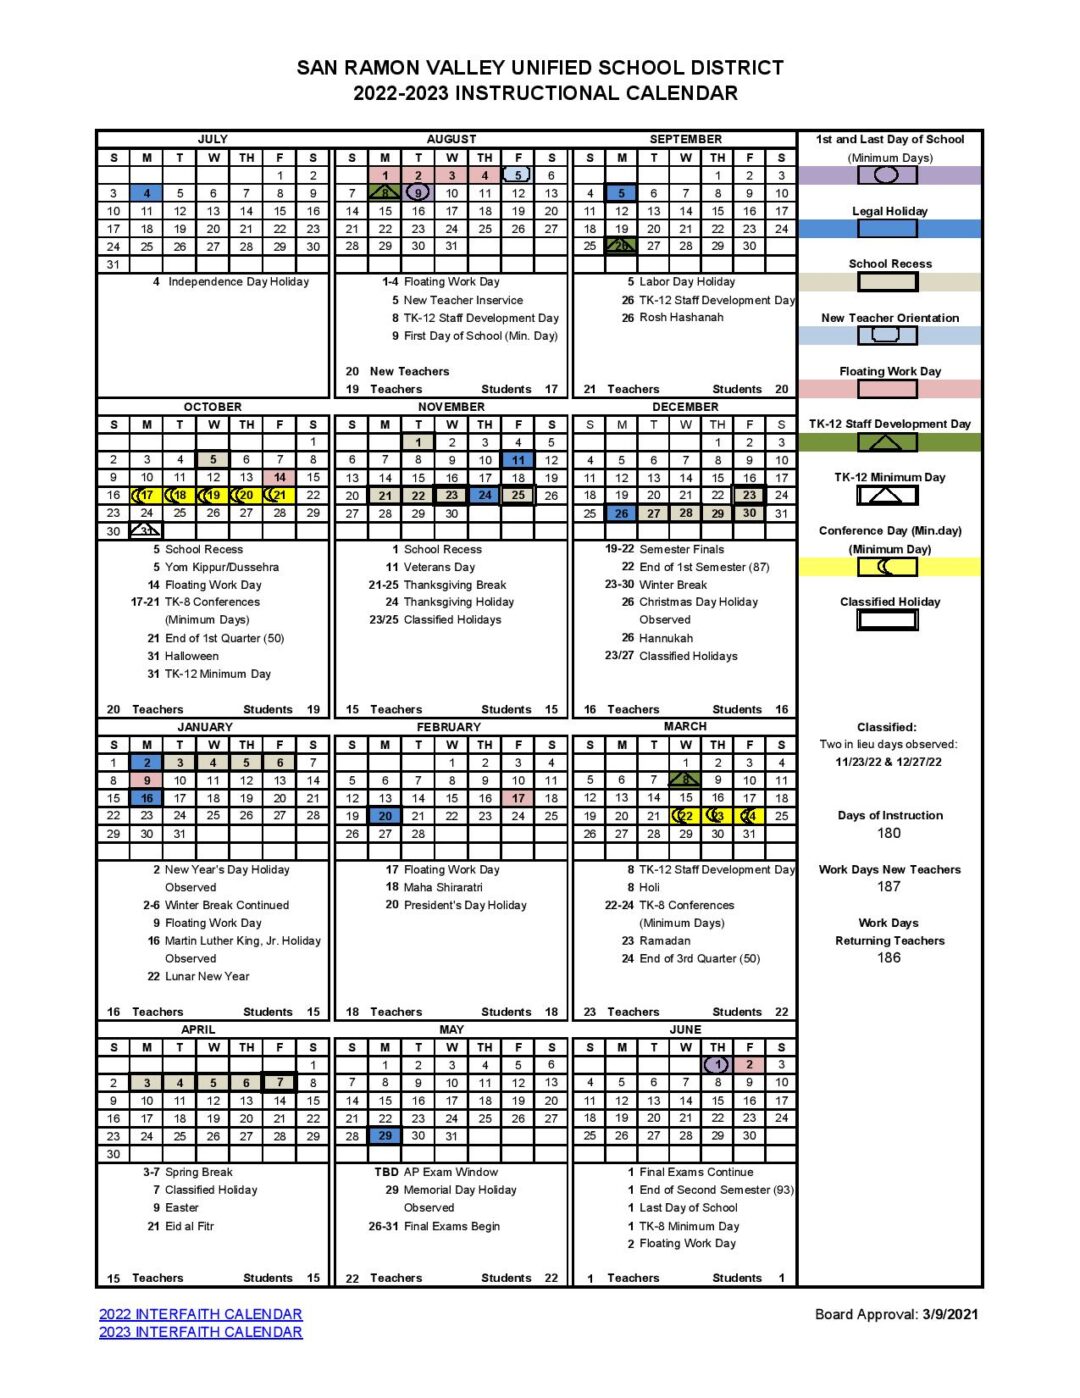 San Ramon Valley Unified School District Calendar 2022 2023